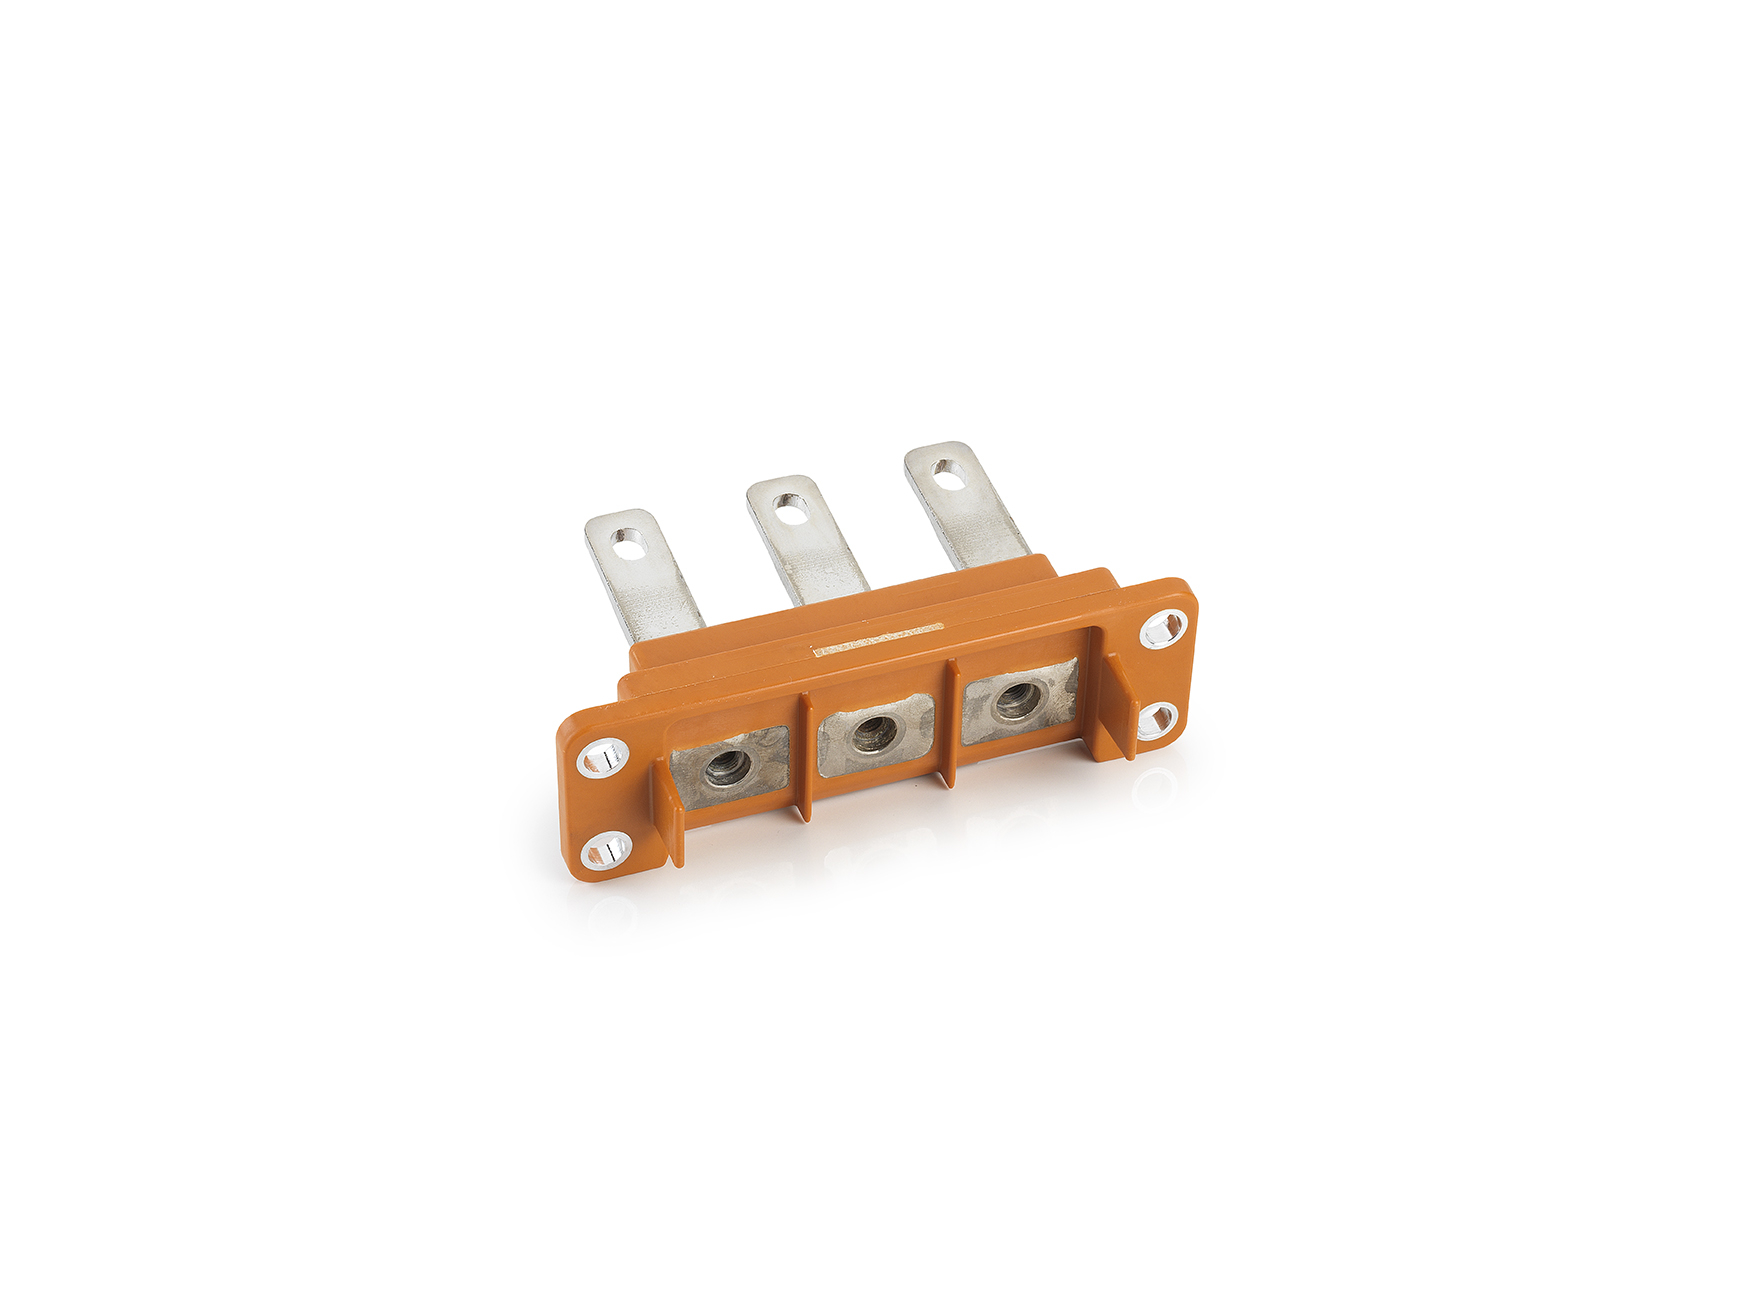 Bus bar connector for EV batteries